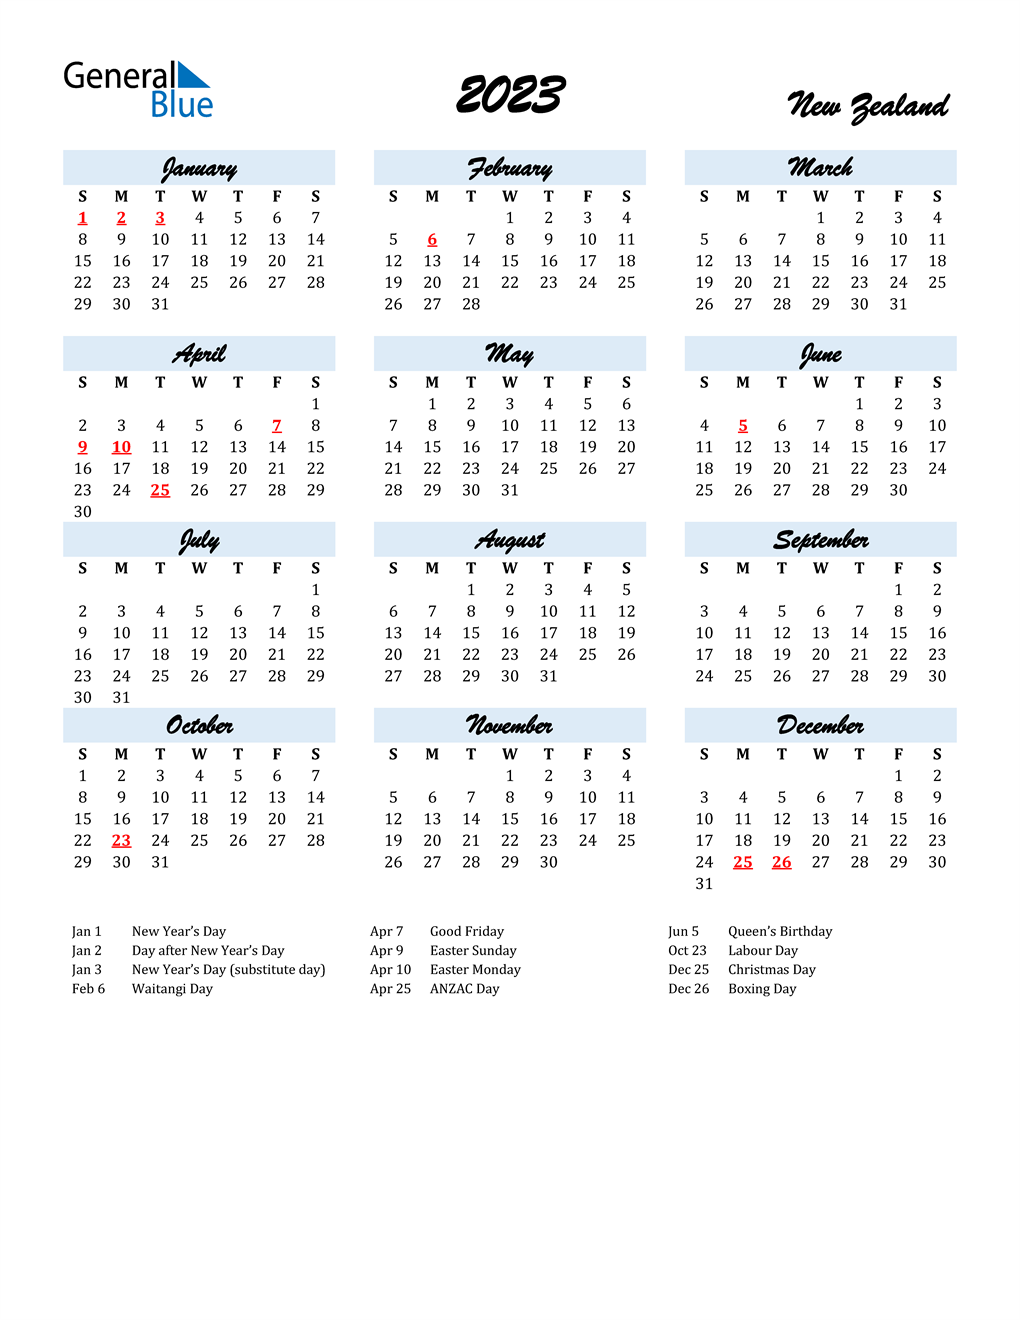 2023 New Zealand Calendar With Holidays 2023 New Zealand Calendar With Holidays Thaddeus Tanner 2706